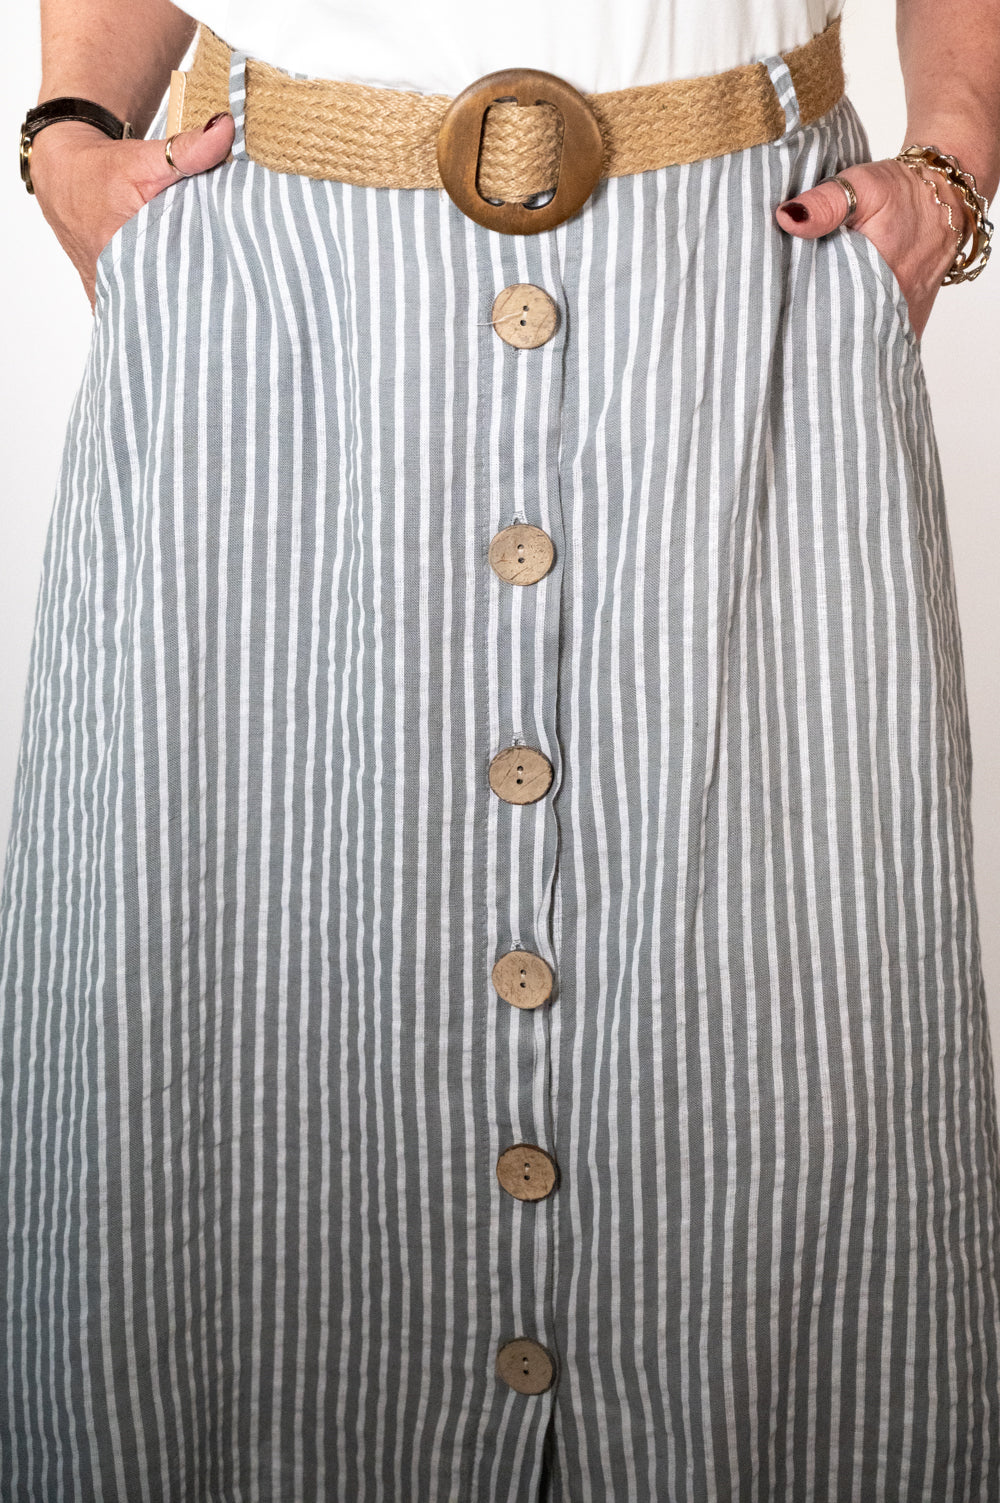 Silver Stripe Belted Midi Skirt